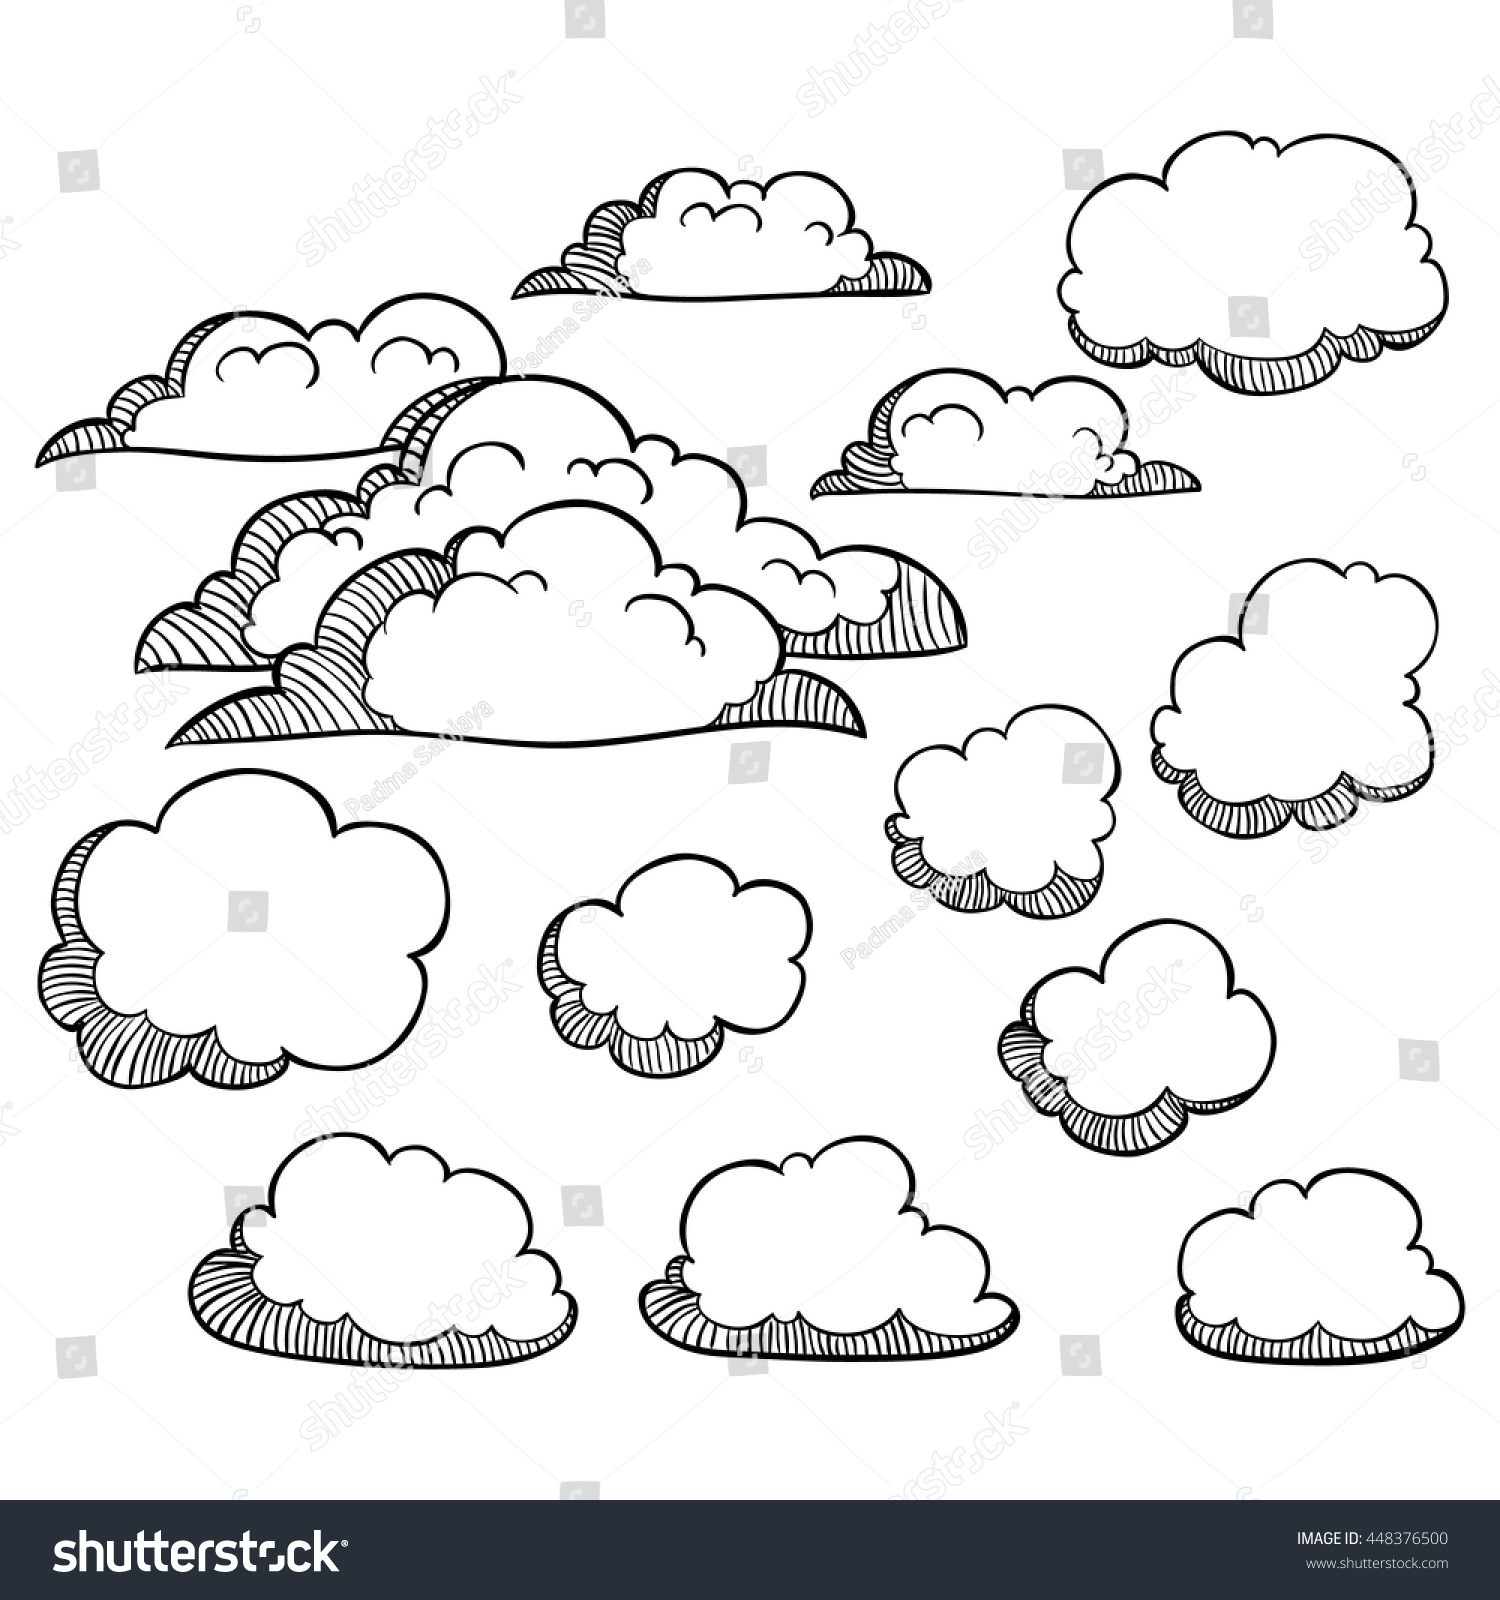 Рисунки для срисовки облако